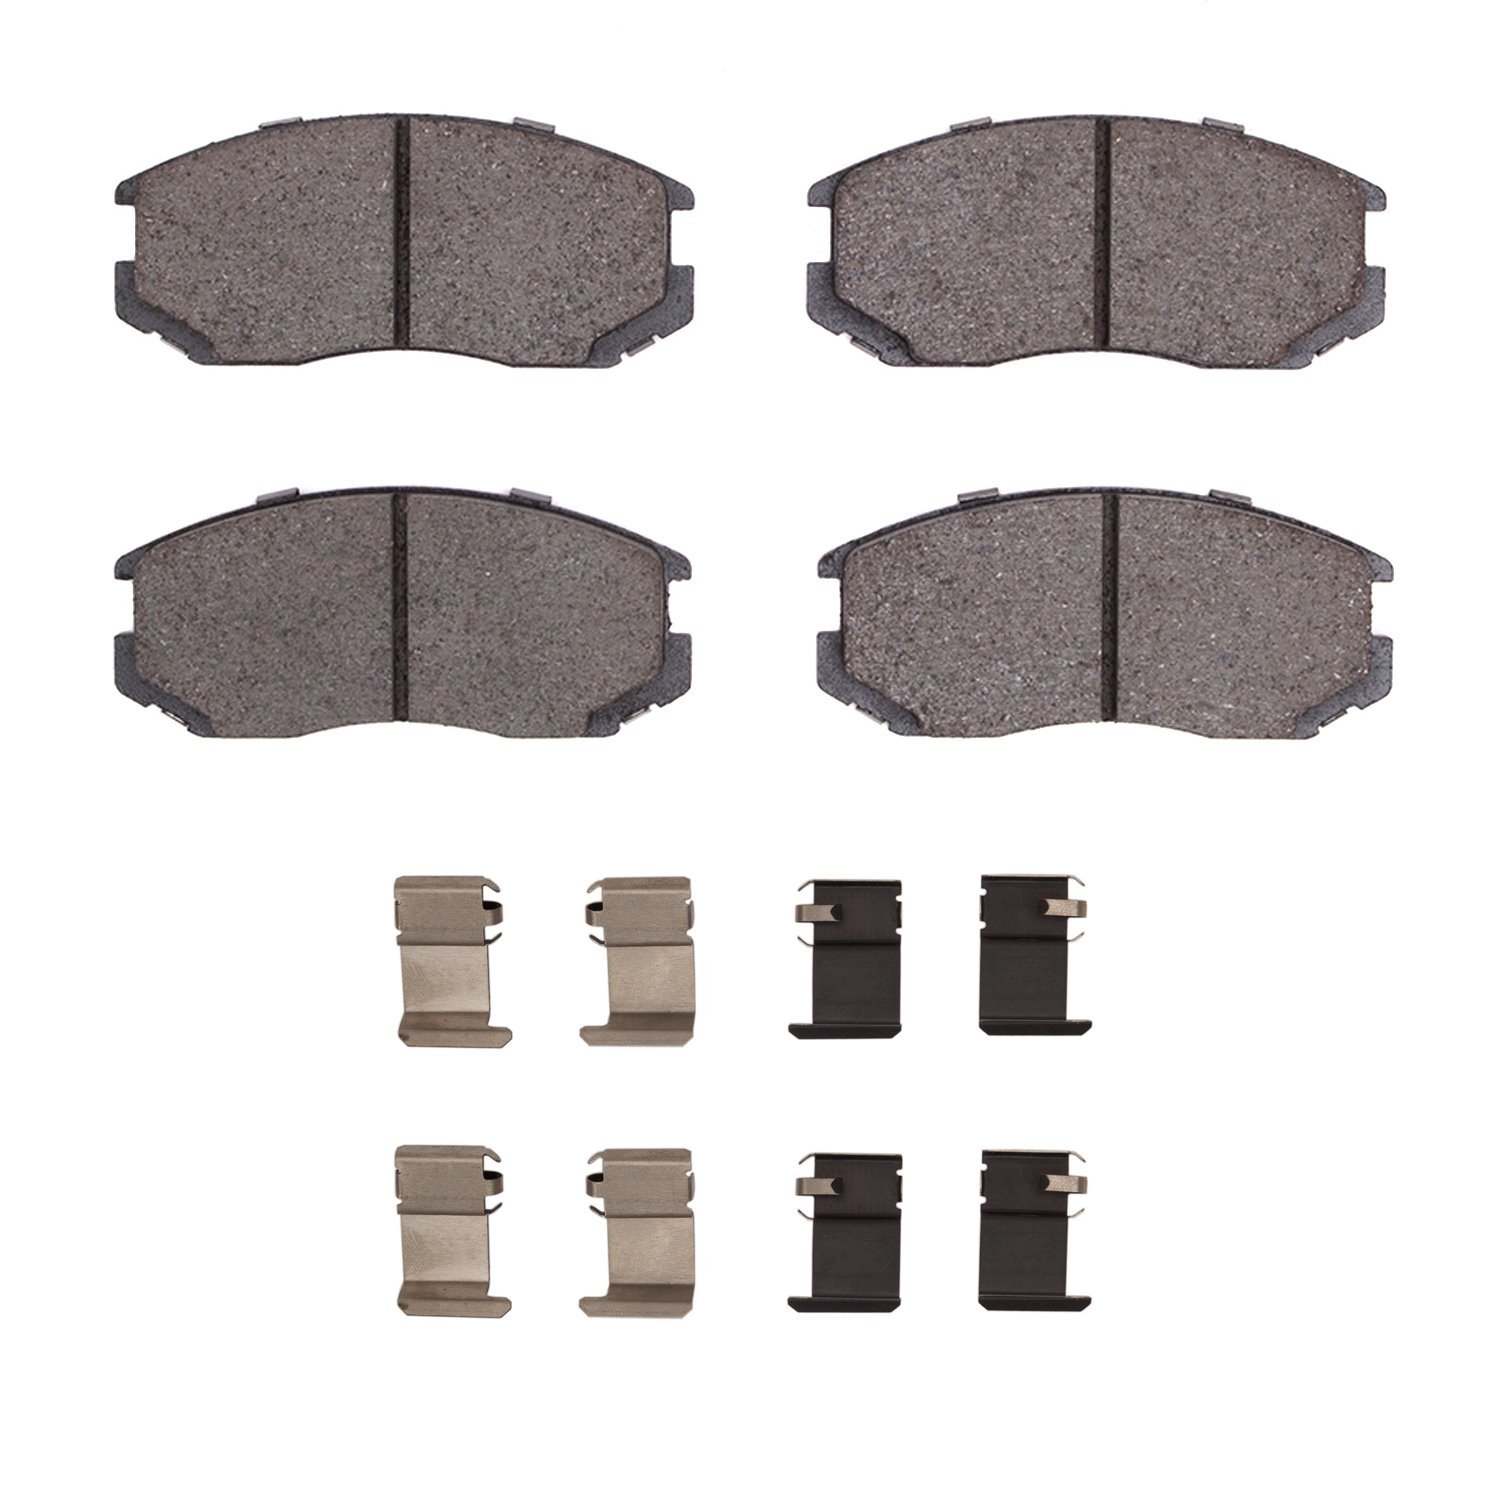 1310-0602-01 3000-Series Ceramic Brake Pads & Hardware Kit, 1991-2000 Multiple Makes/Models, Position: Front